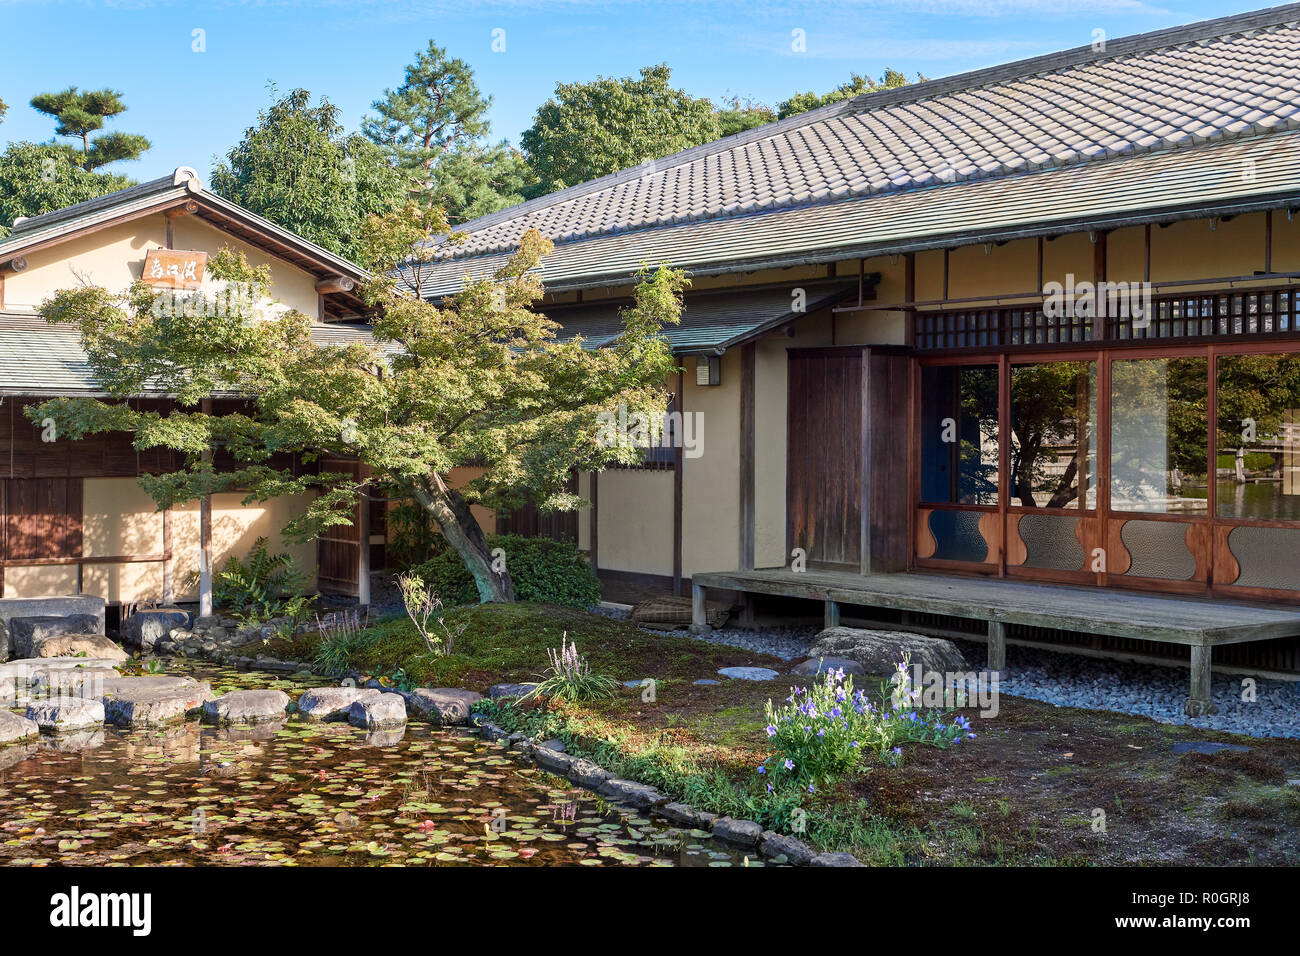 https://c8.alamy.com/comp/R0GRJ8/traditional-japanese-house-in-the-shirotori-park-R0GRJ8.jpg